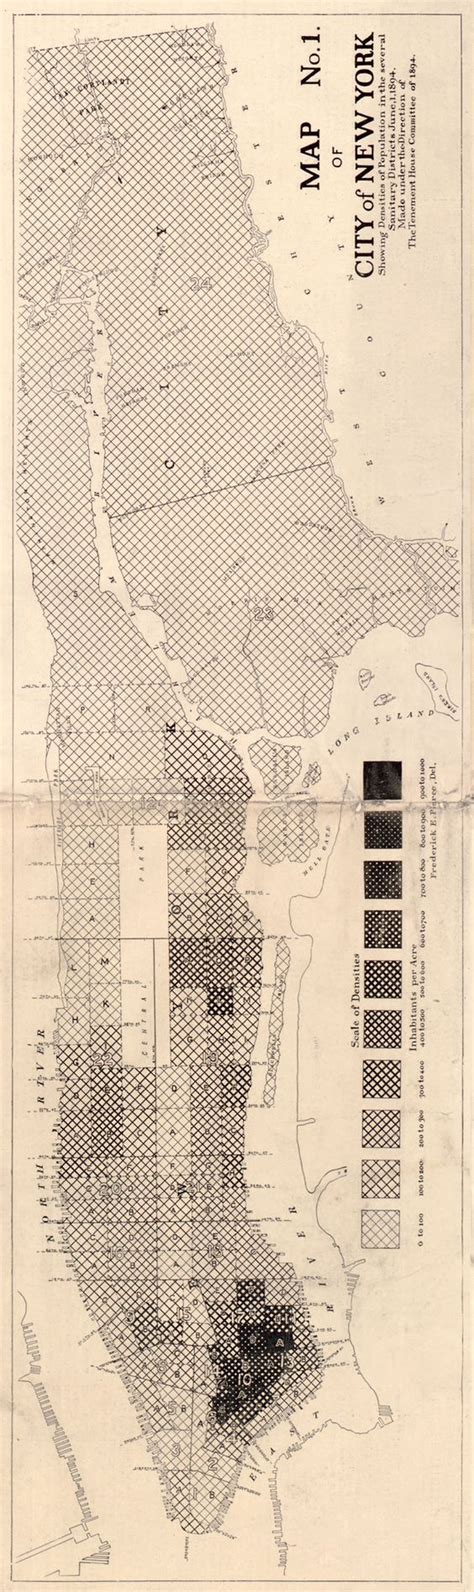 The New York City Population Density Map 1890 Data